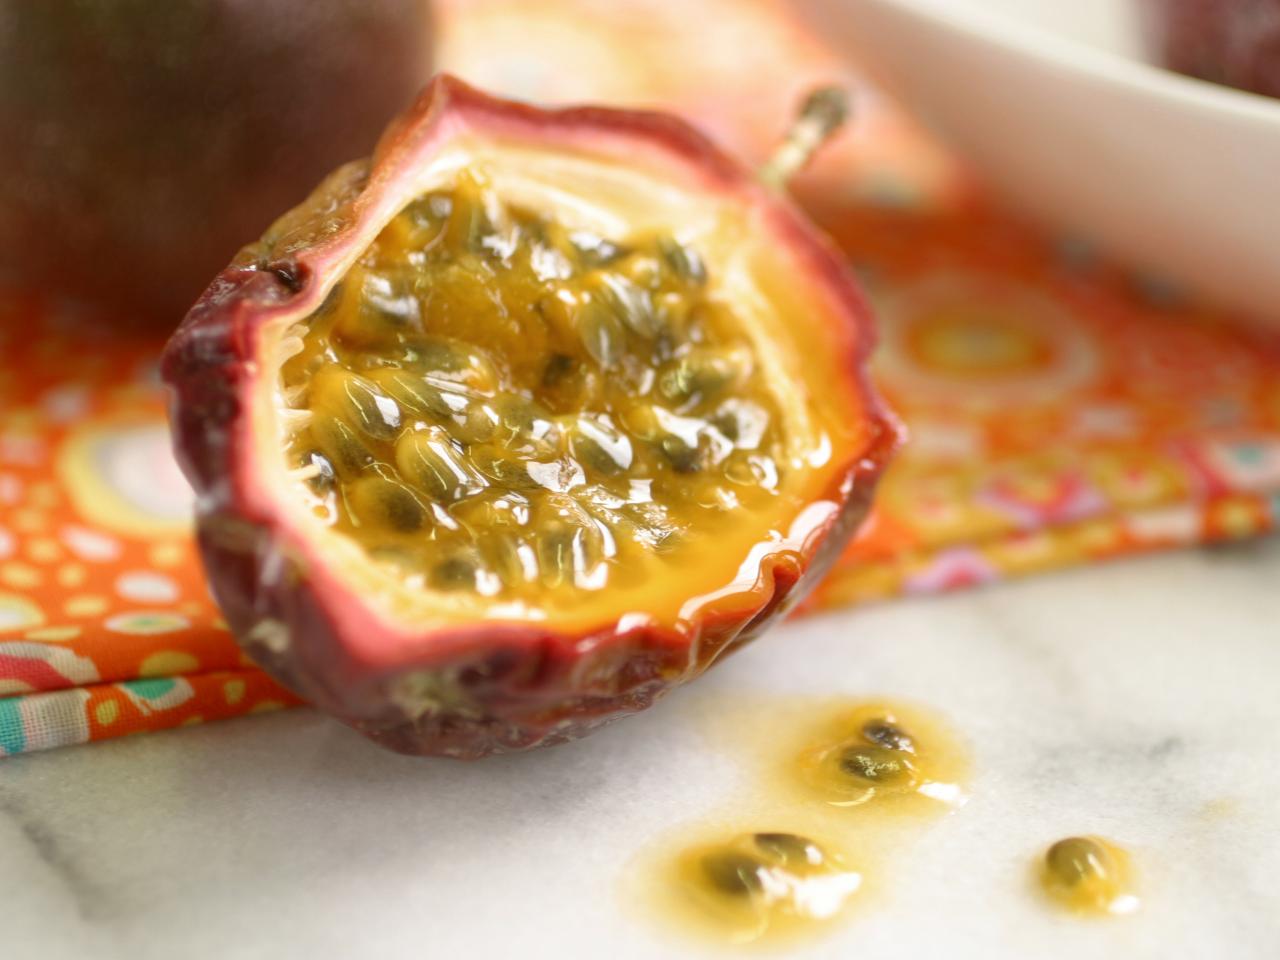 Tropical Treats: Granadilla vs Passion Fruit - Culinary Uses